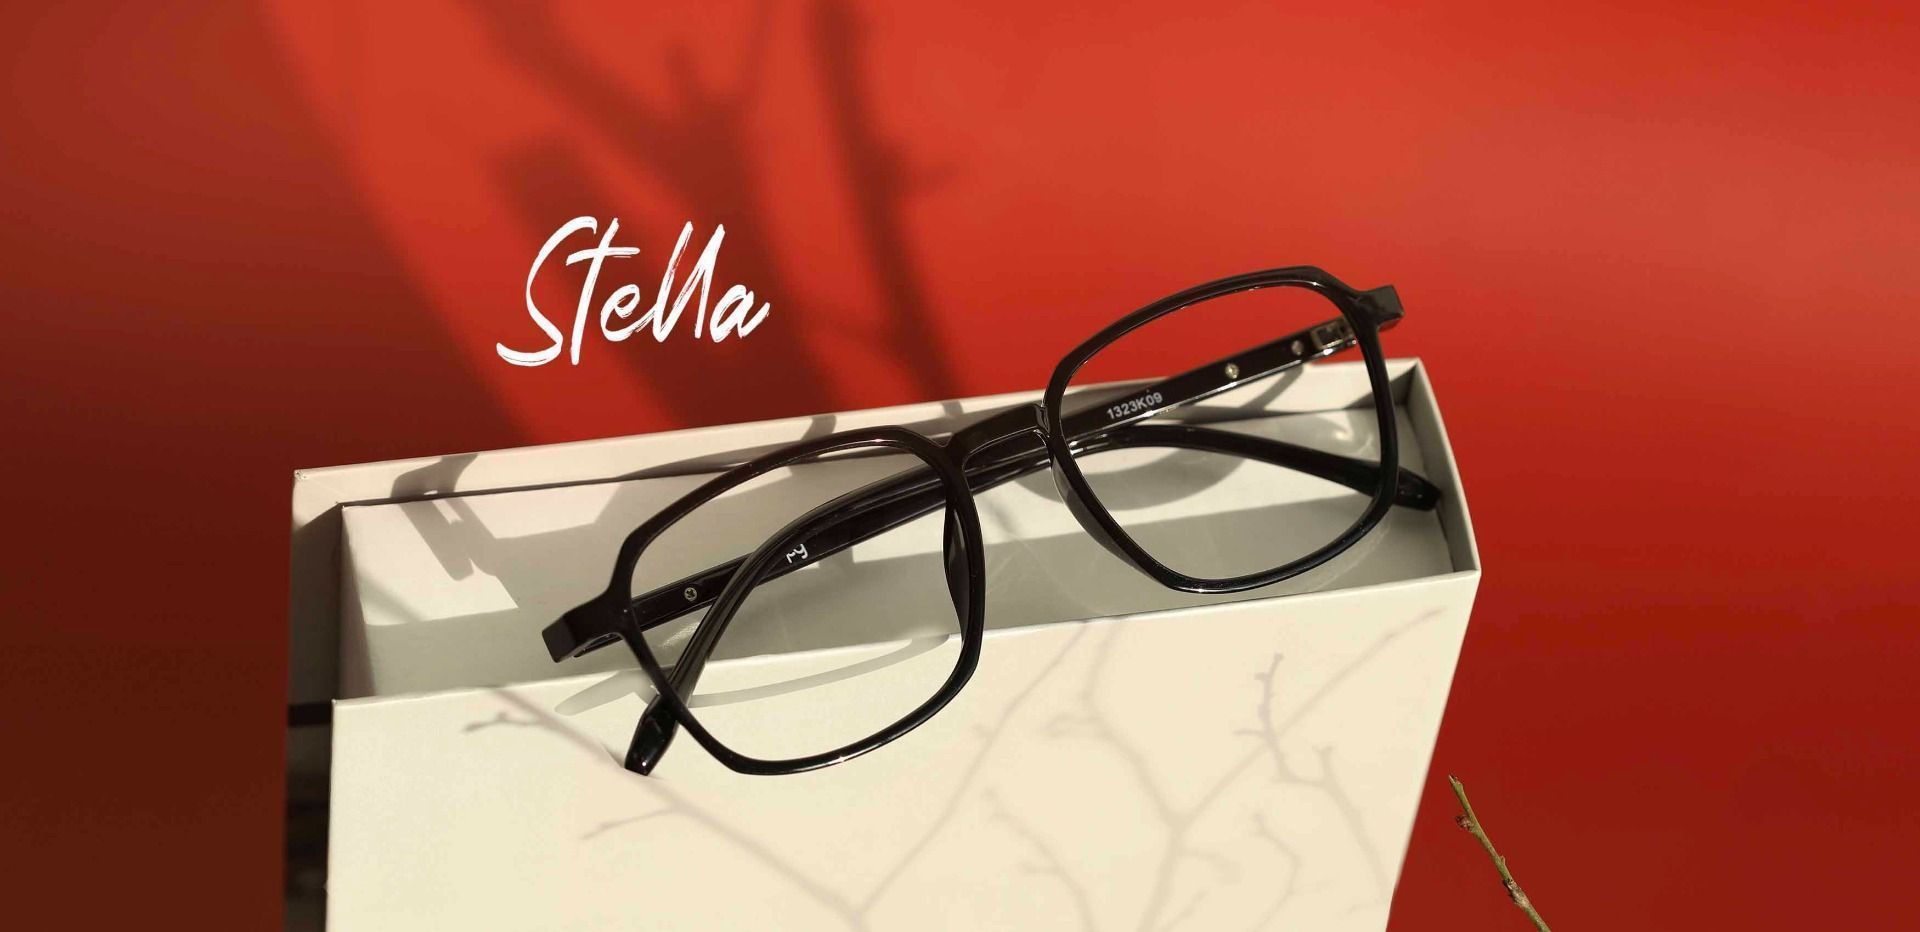 Stella Square Reading Glasses - Black